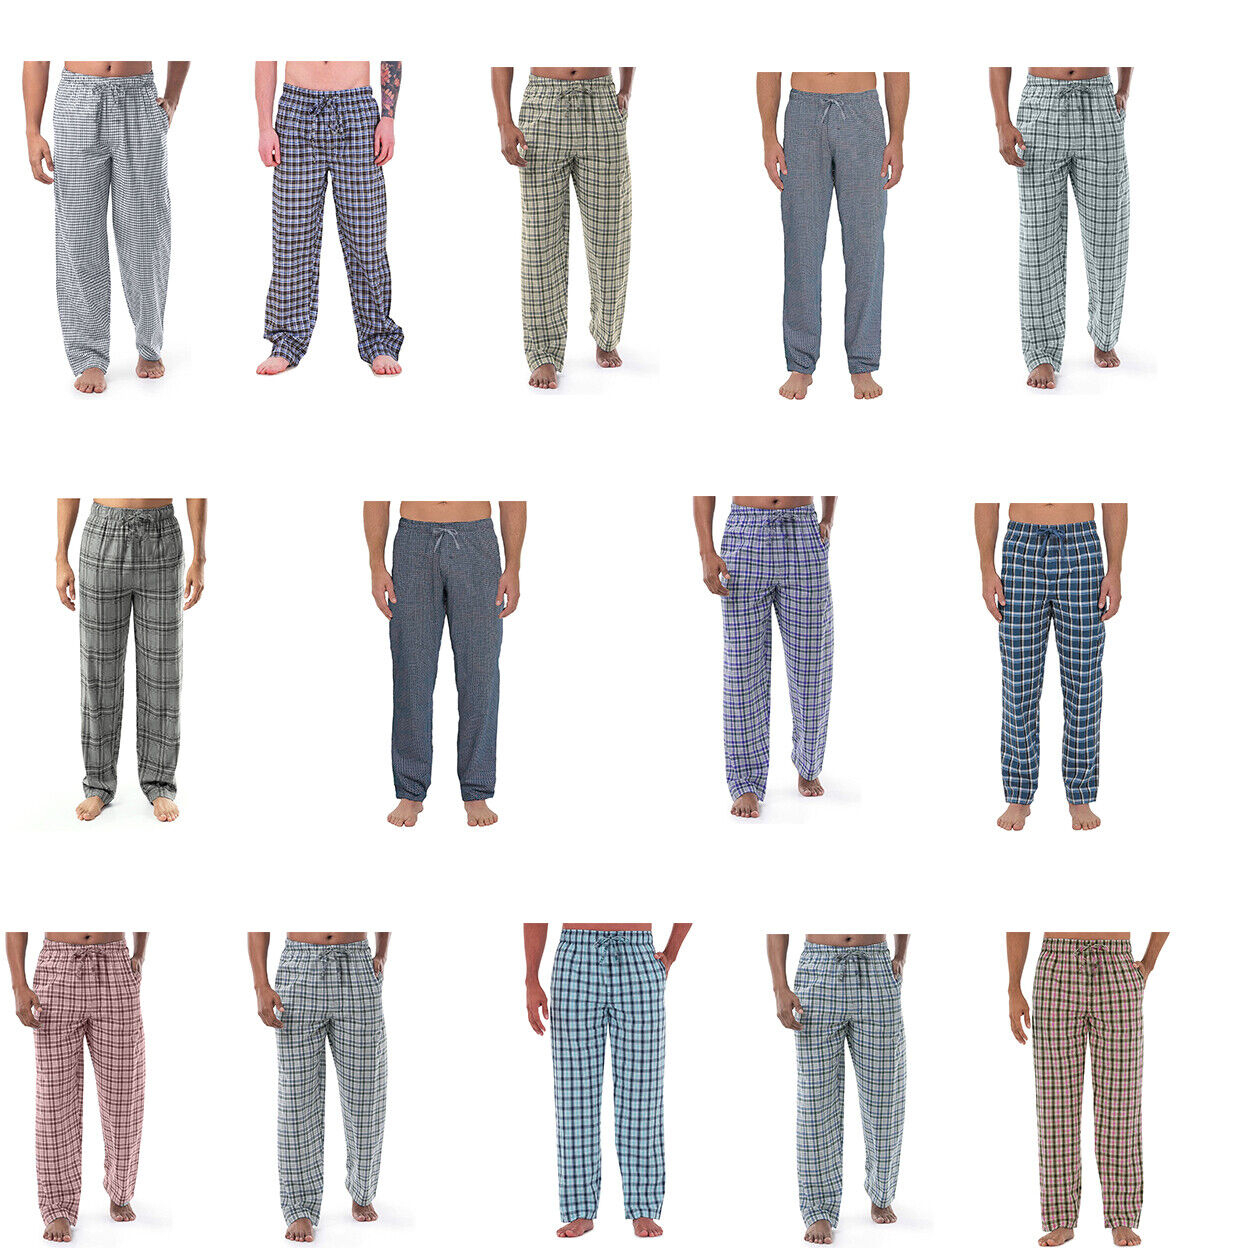 Men's Ultra-Soft Plaid Cotton Jersey Knit Comfy Sleep Lounge Pajama Pants - Blue, Large